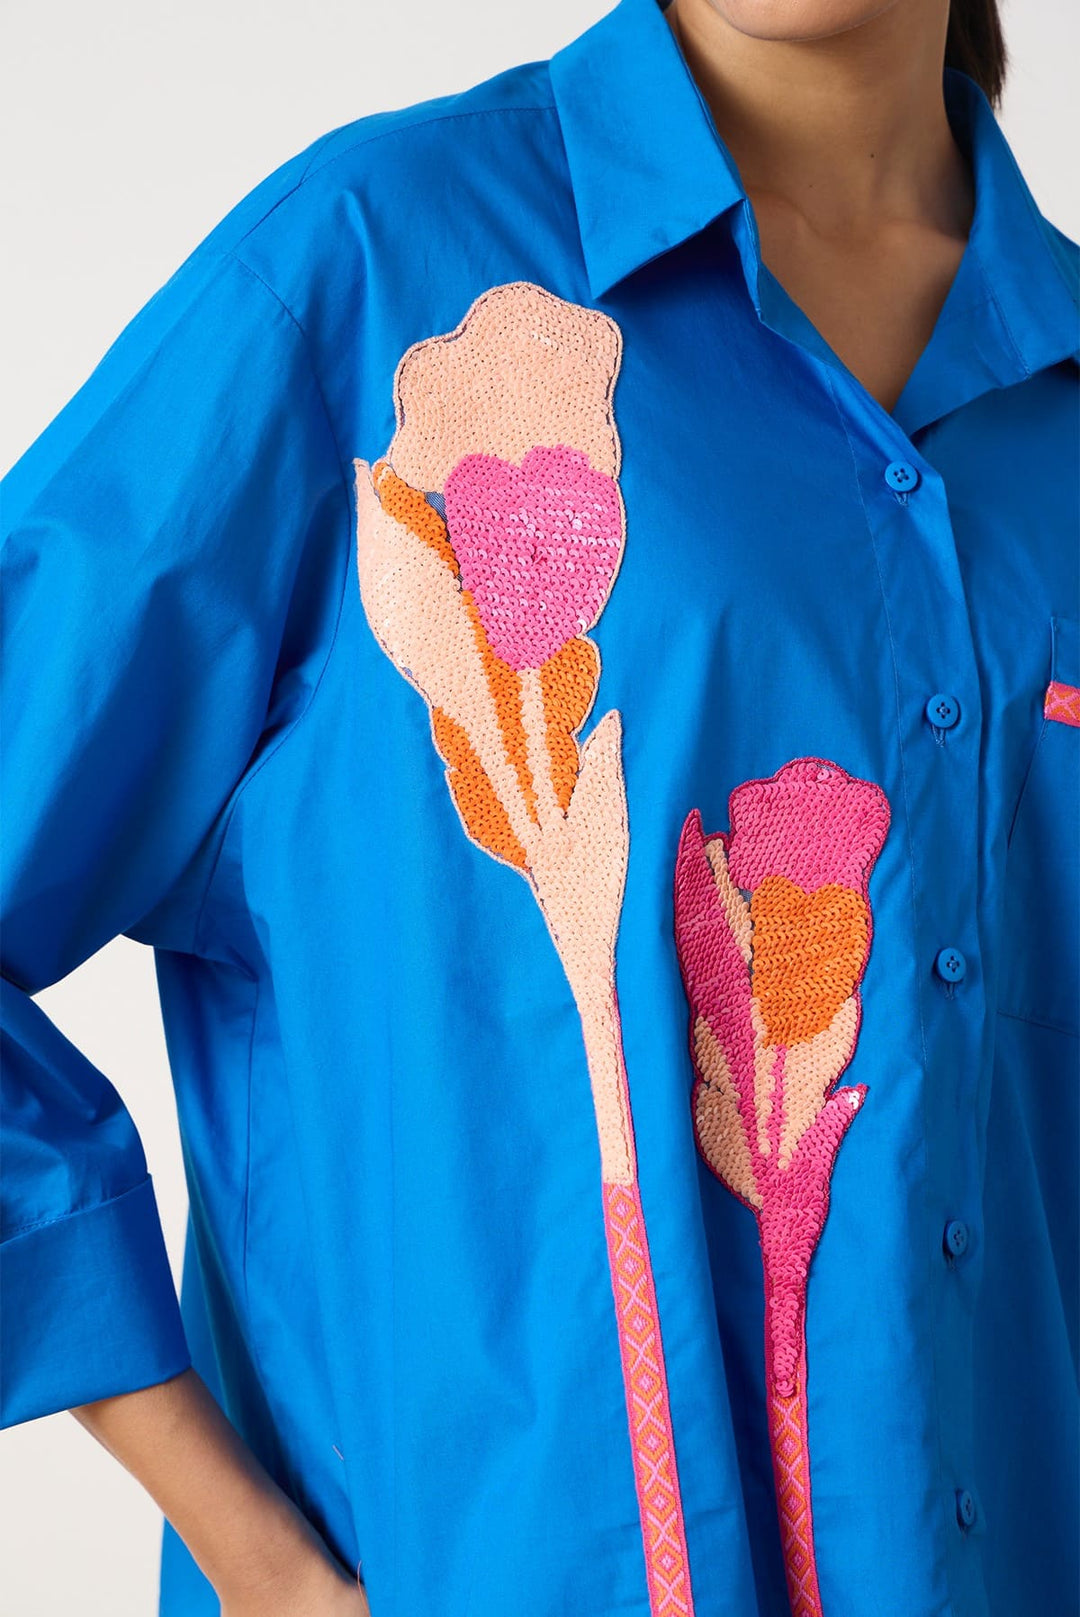 Anne Applique Shirt A chic rendition of a classic button-down shirt